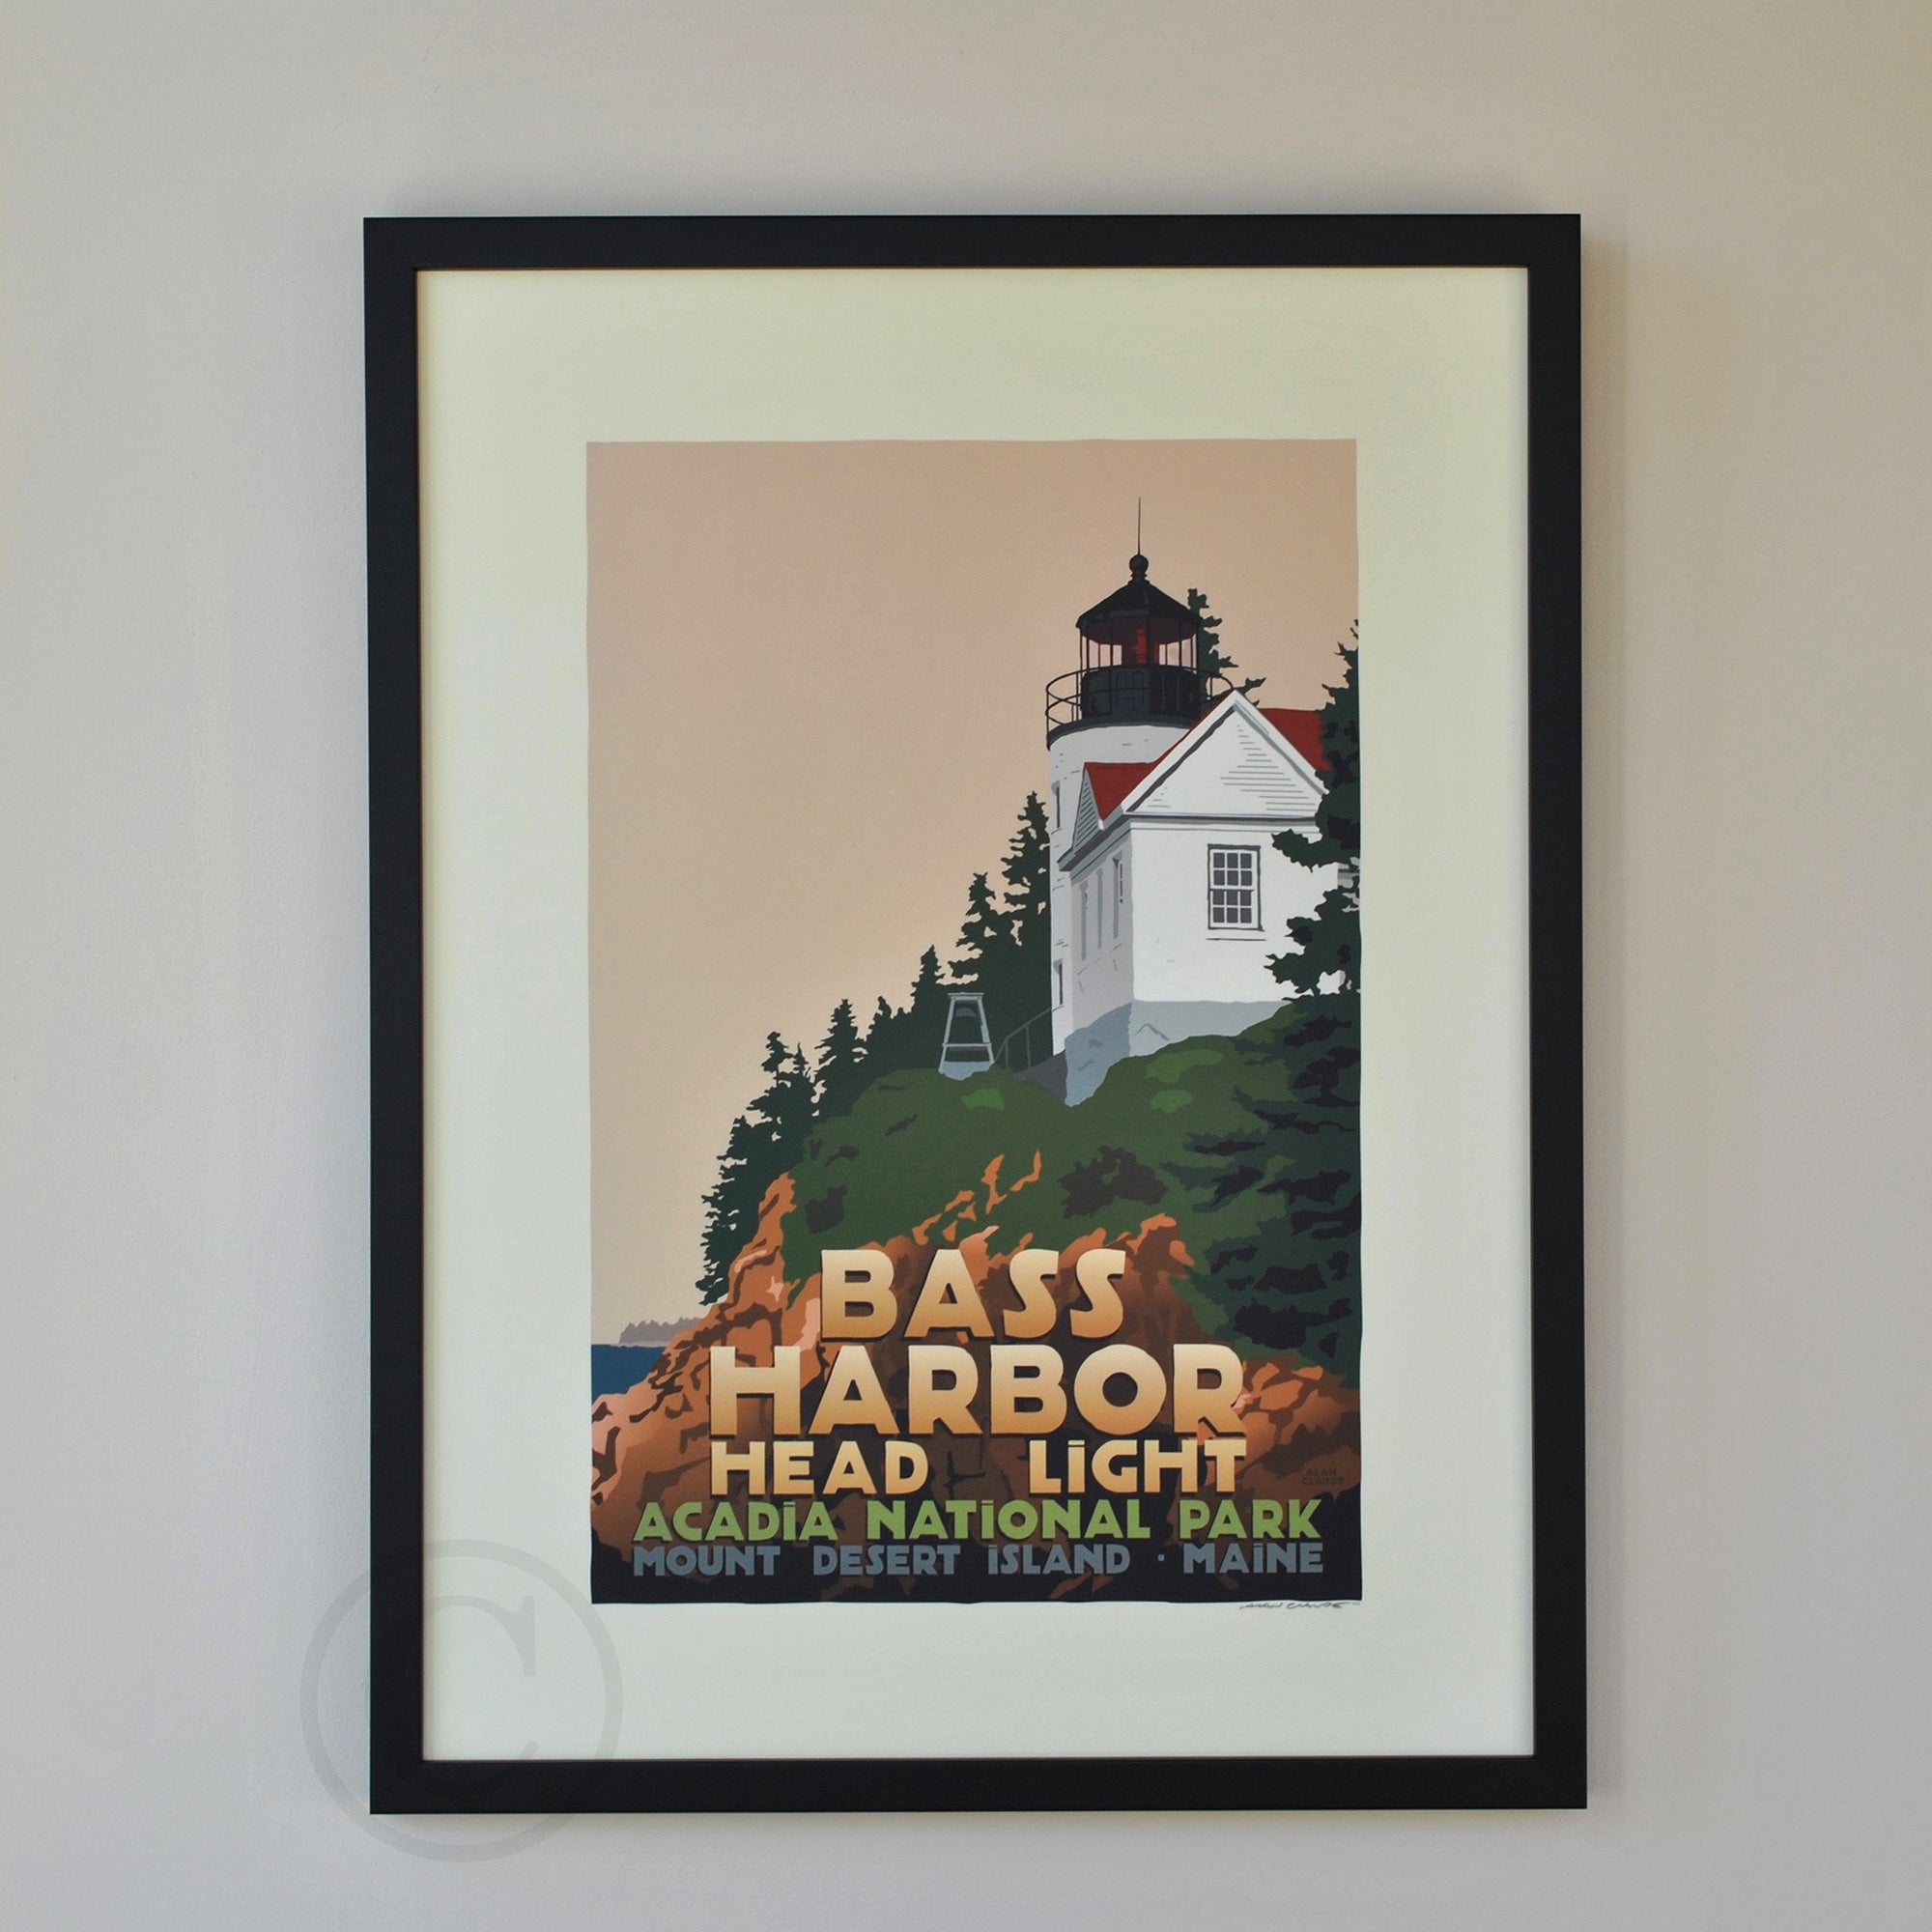 Bass Harbor Head Light Art Print 18" x 24" Framed Travel Poster By Alan Claude - Maine